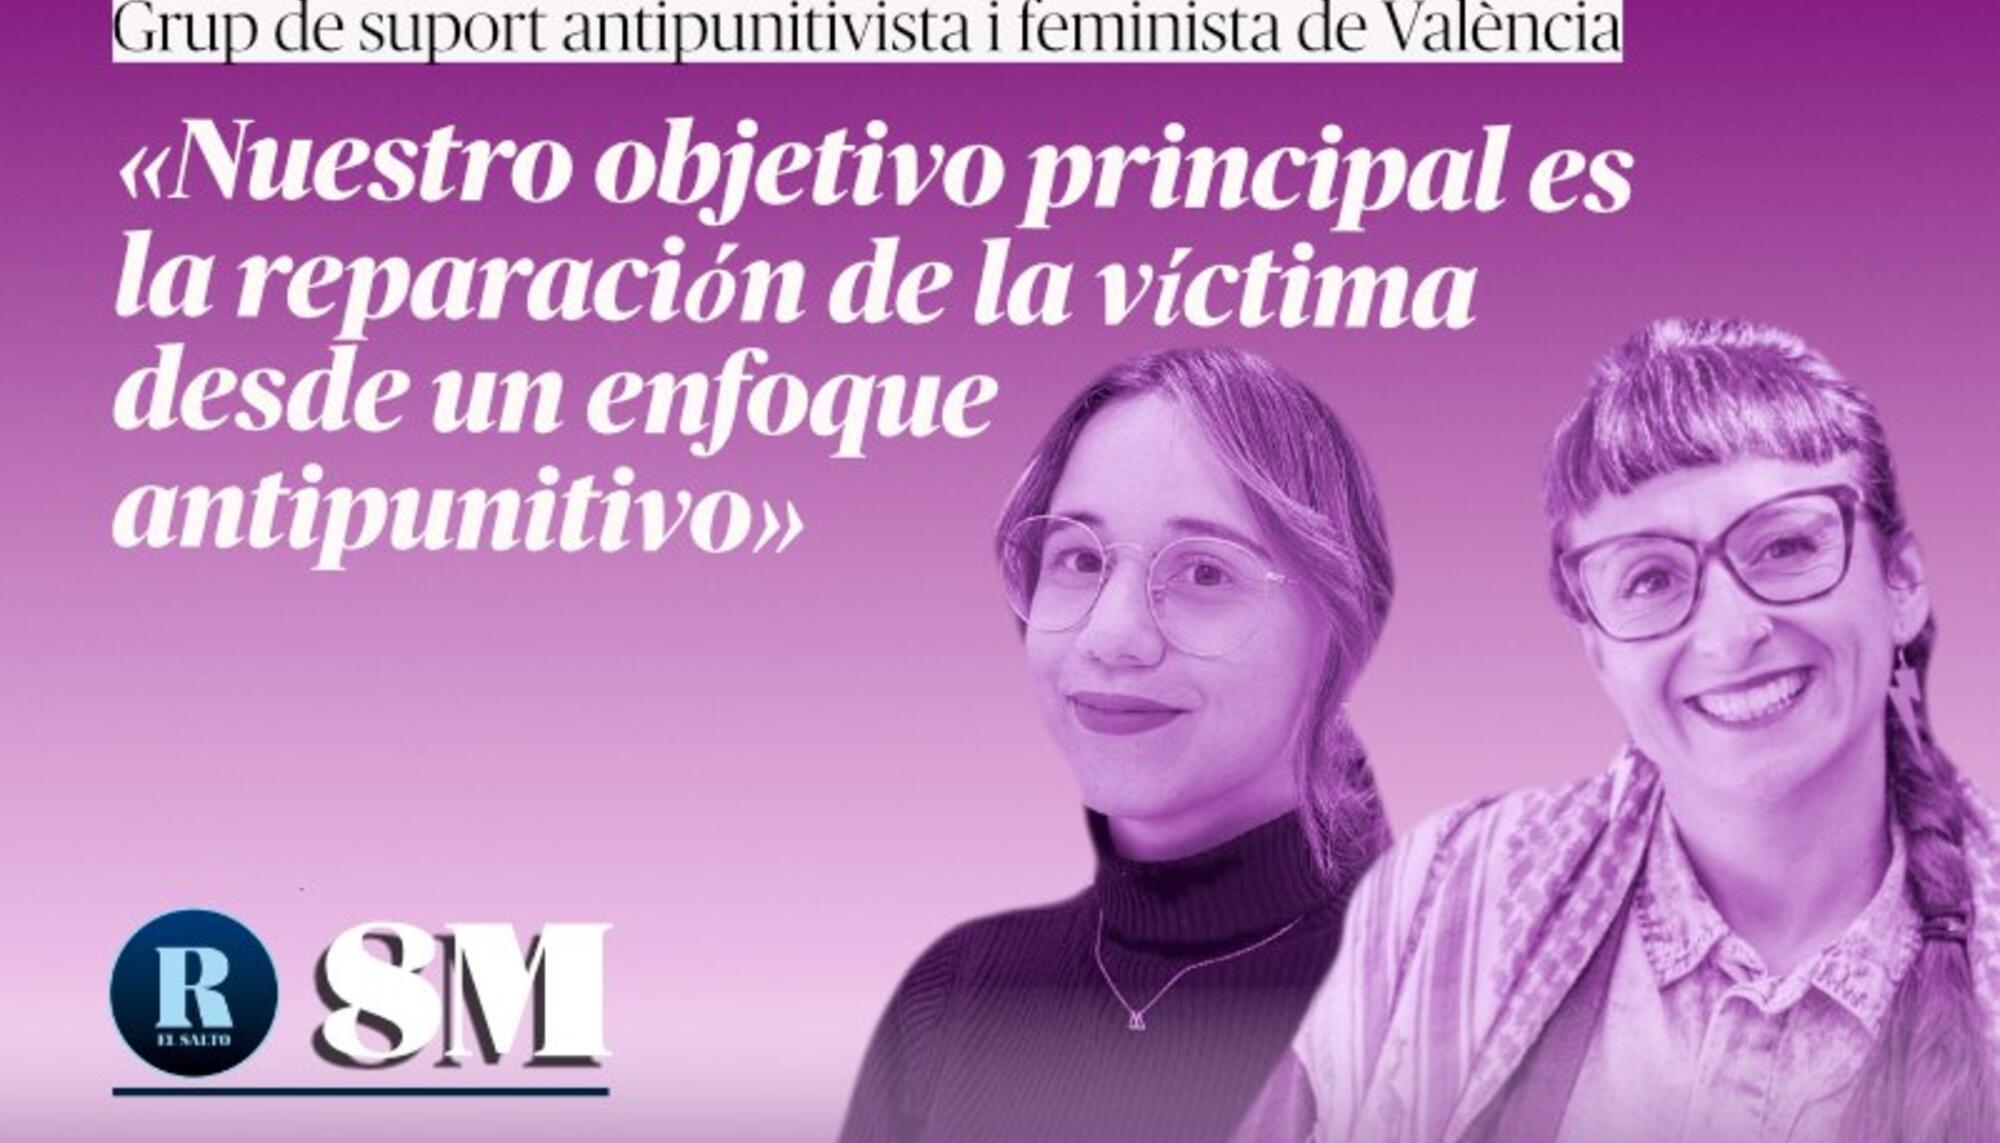 Grup de suport antipunitivista i feminista de València